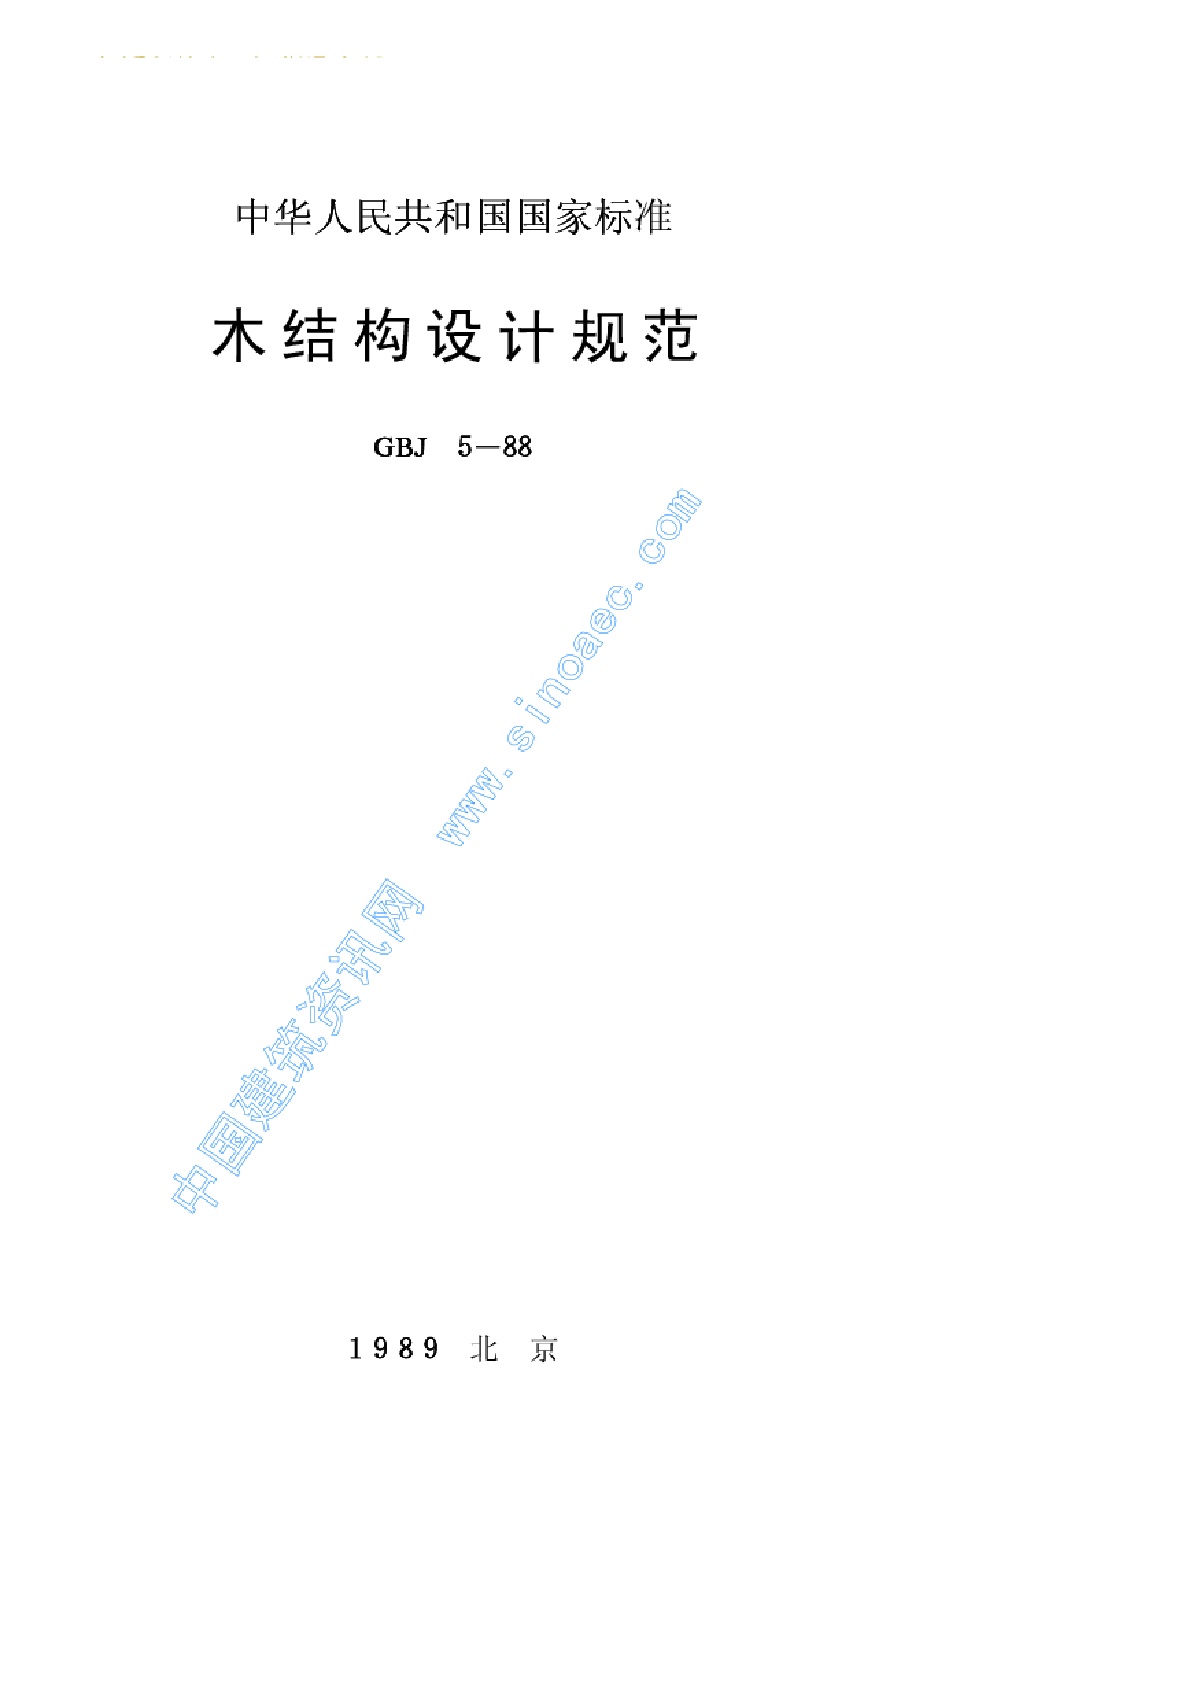 GBJ 5 1988 木结构设计规范.pdf-图一